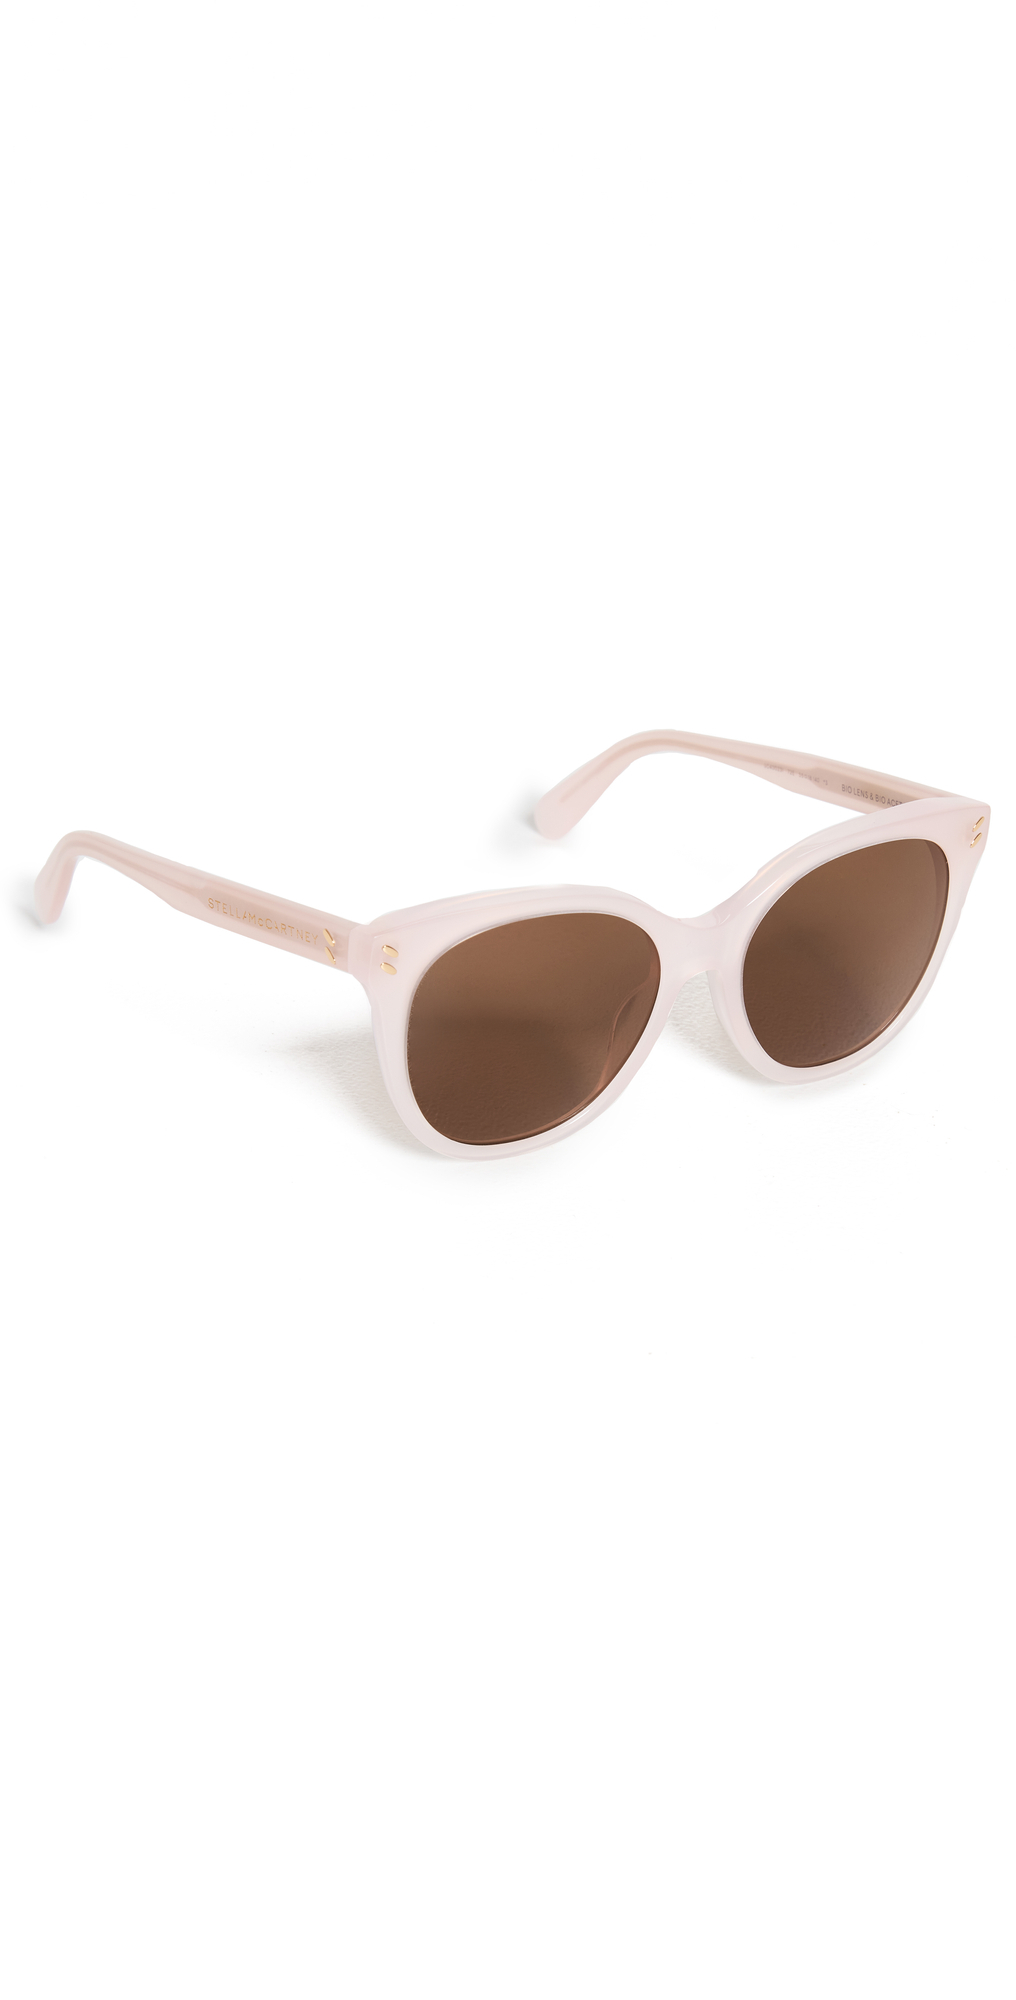 Stella McCartney Oval Sunglasses in brown / pink